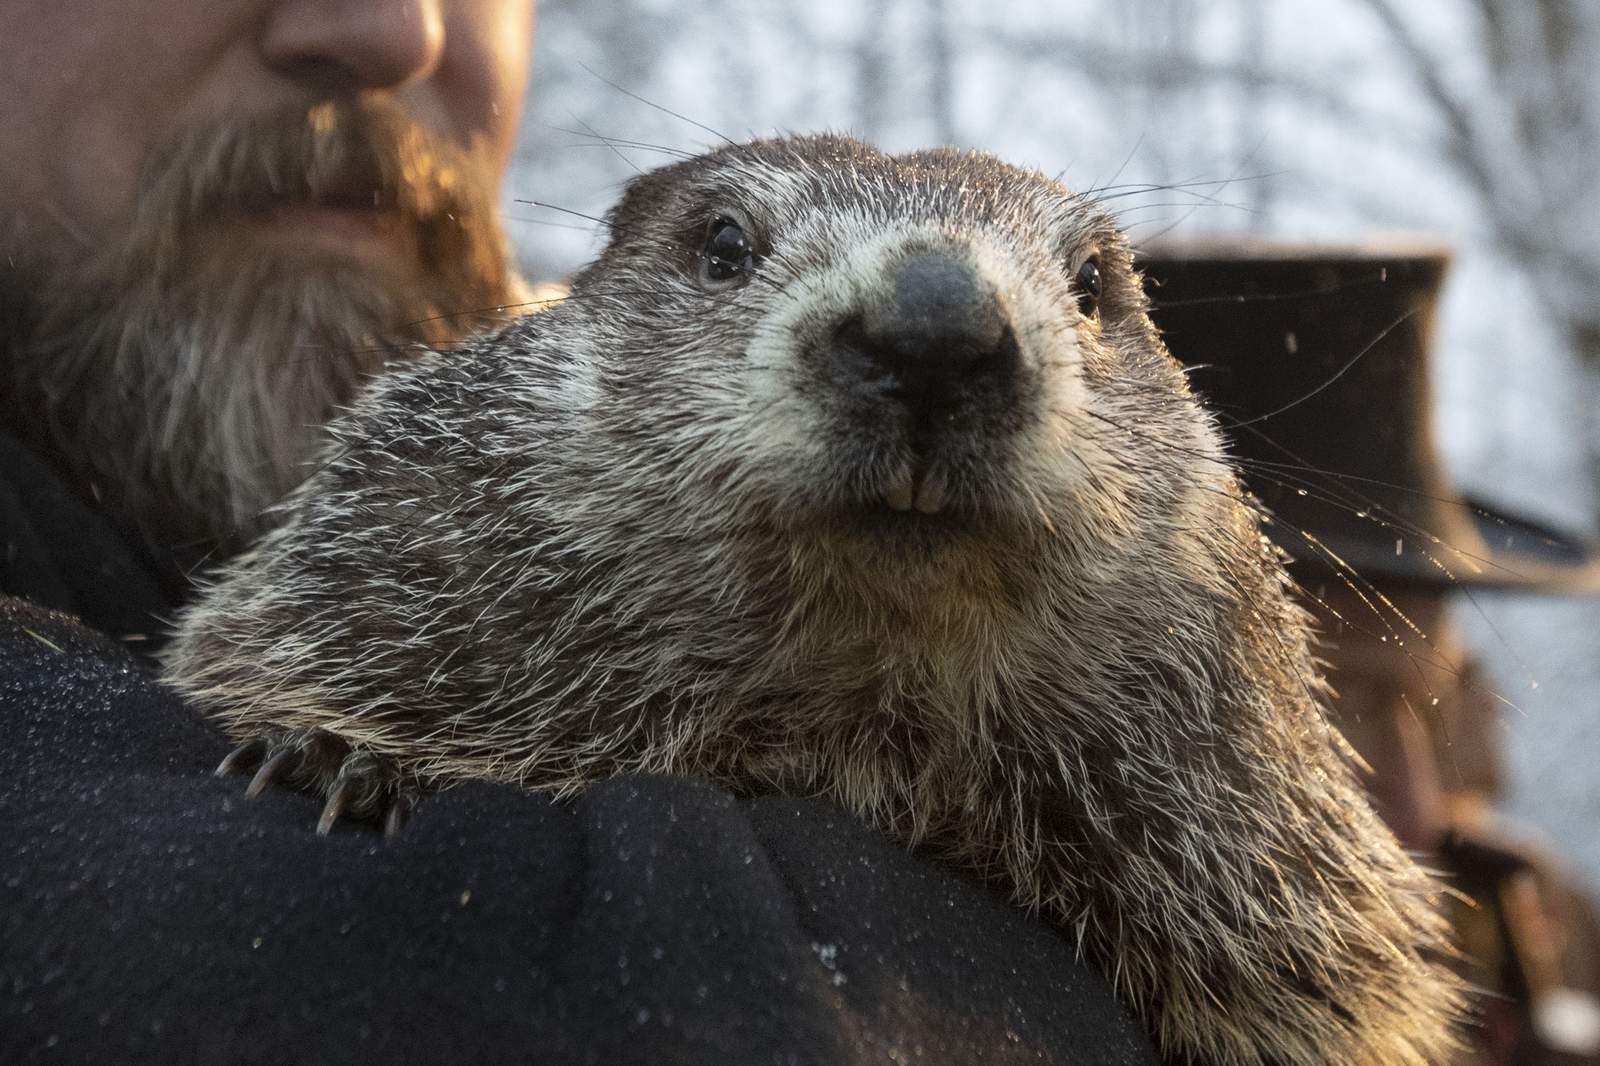 Gloomy Groundhog Day: Punxsutawney Phil says more winter